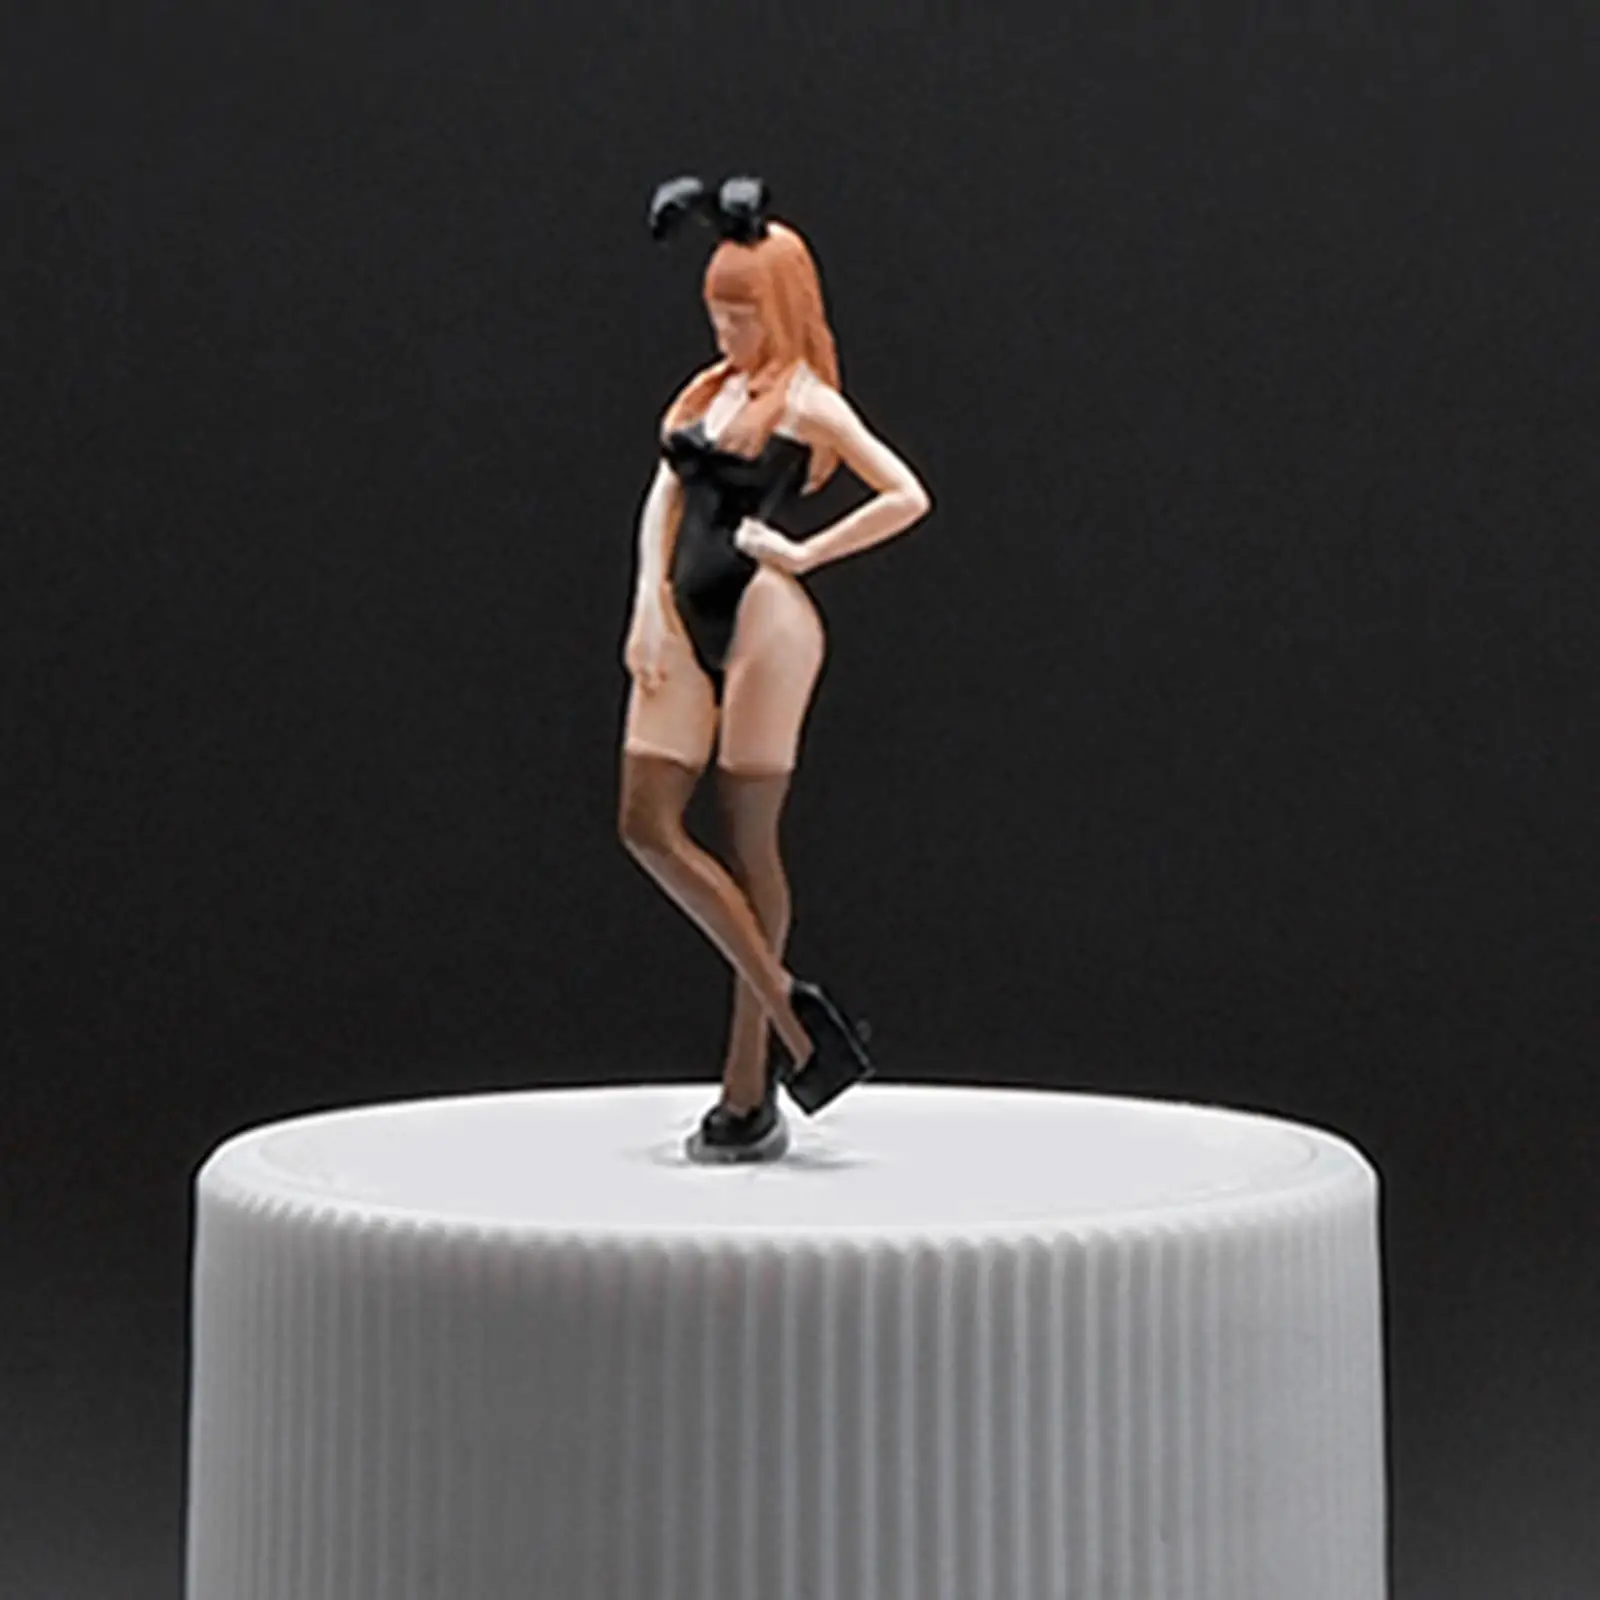 Miniature 1:64 Girls Figures Model Trains People Figures for DIY Scene Decor